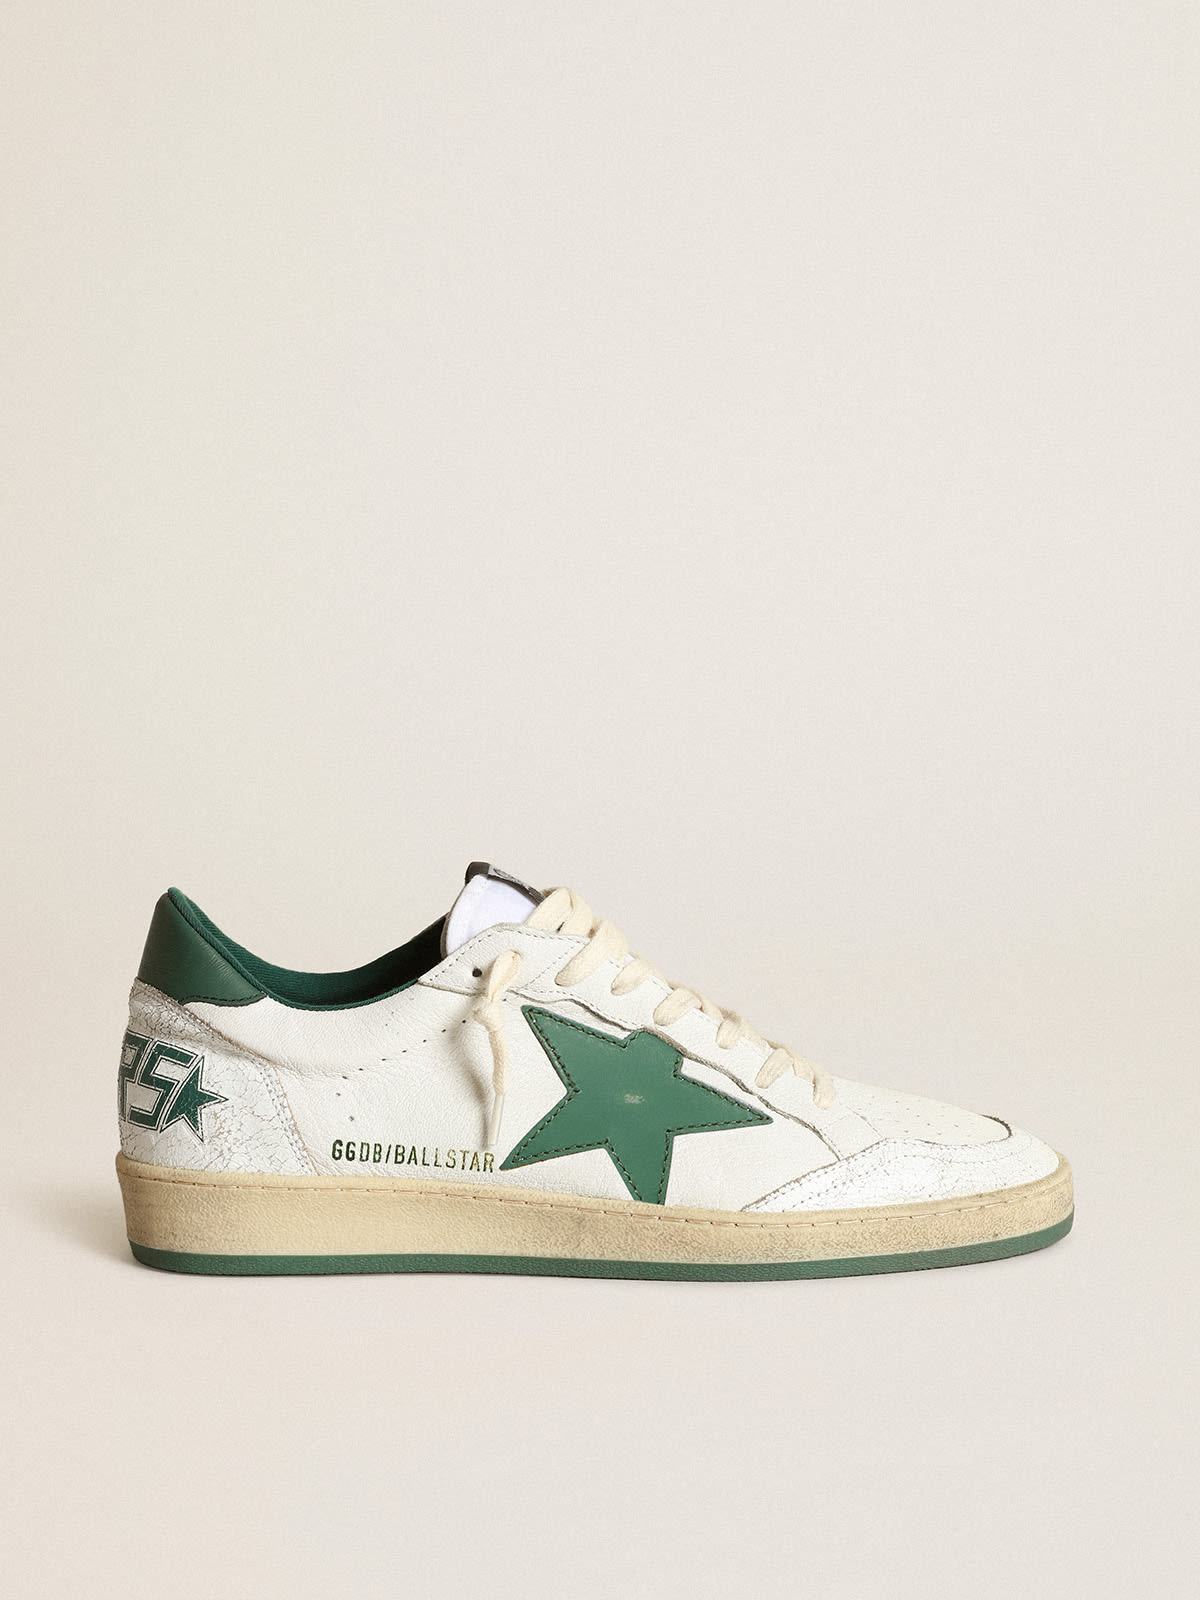 Sneakers Ball Star en cuir nappa blanc avec étoile et contrefort en cuir vert